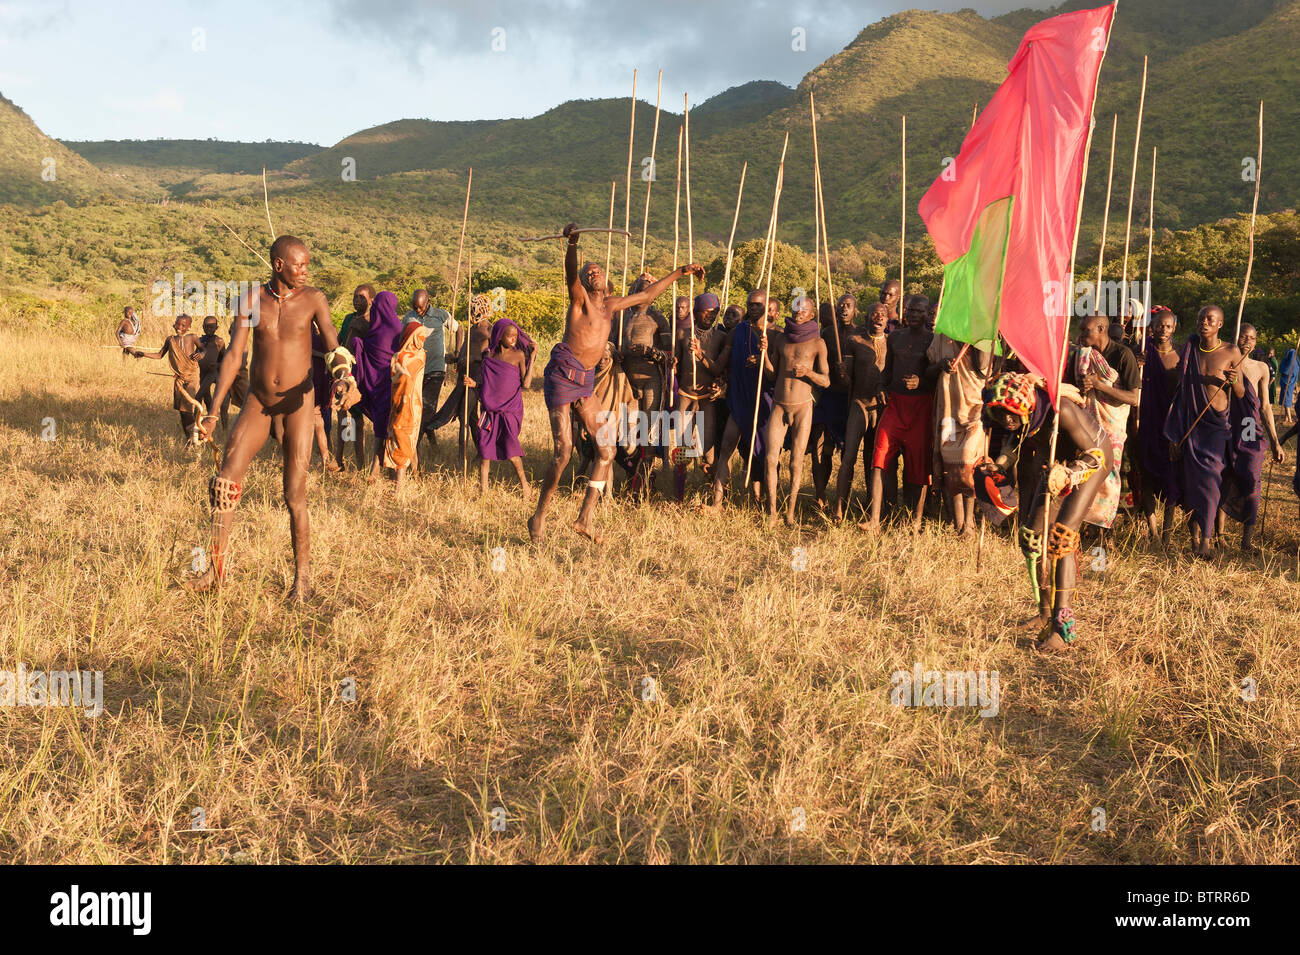 Donga stick fight ceremony, Surma tribe, Tulgit, Omo river valley, Ethiopia Stock Photo